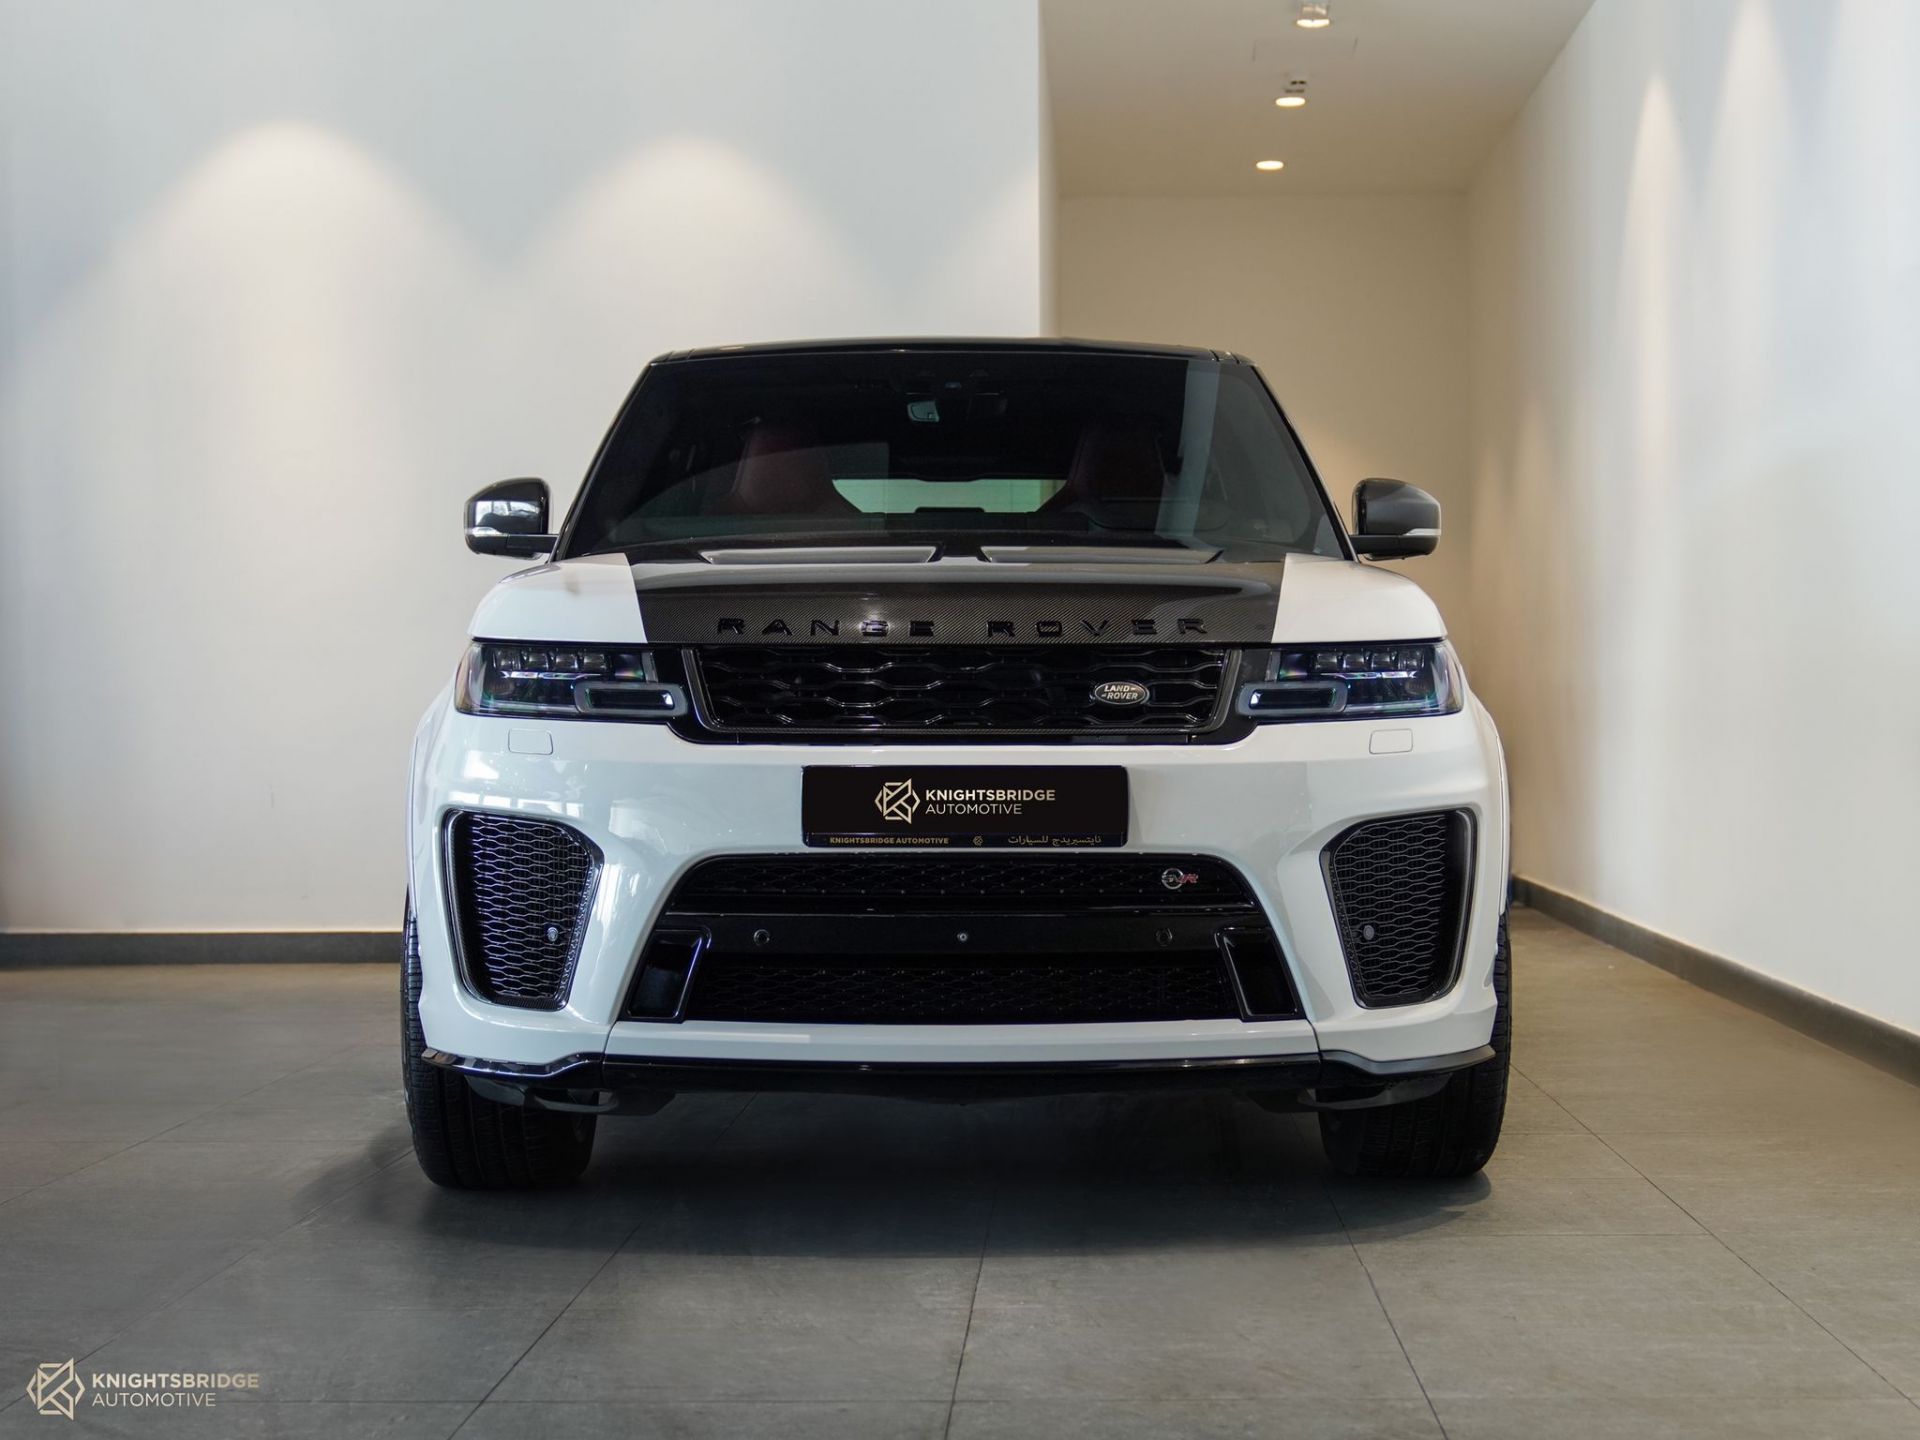 2019 Range Rover Sport SVR at Knightsbridge Automotive - (10349 - 2)